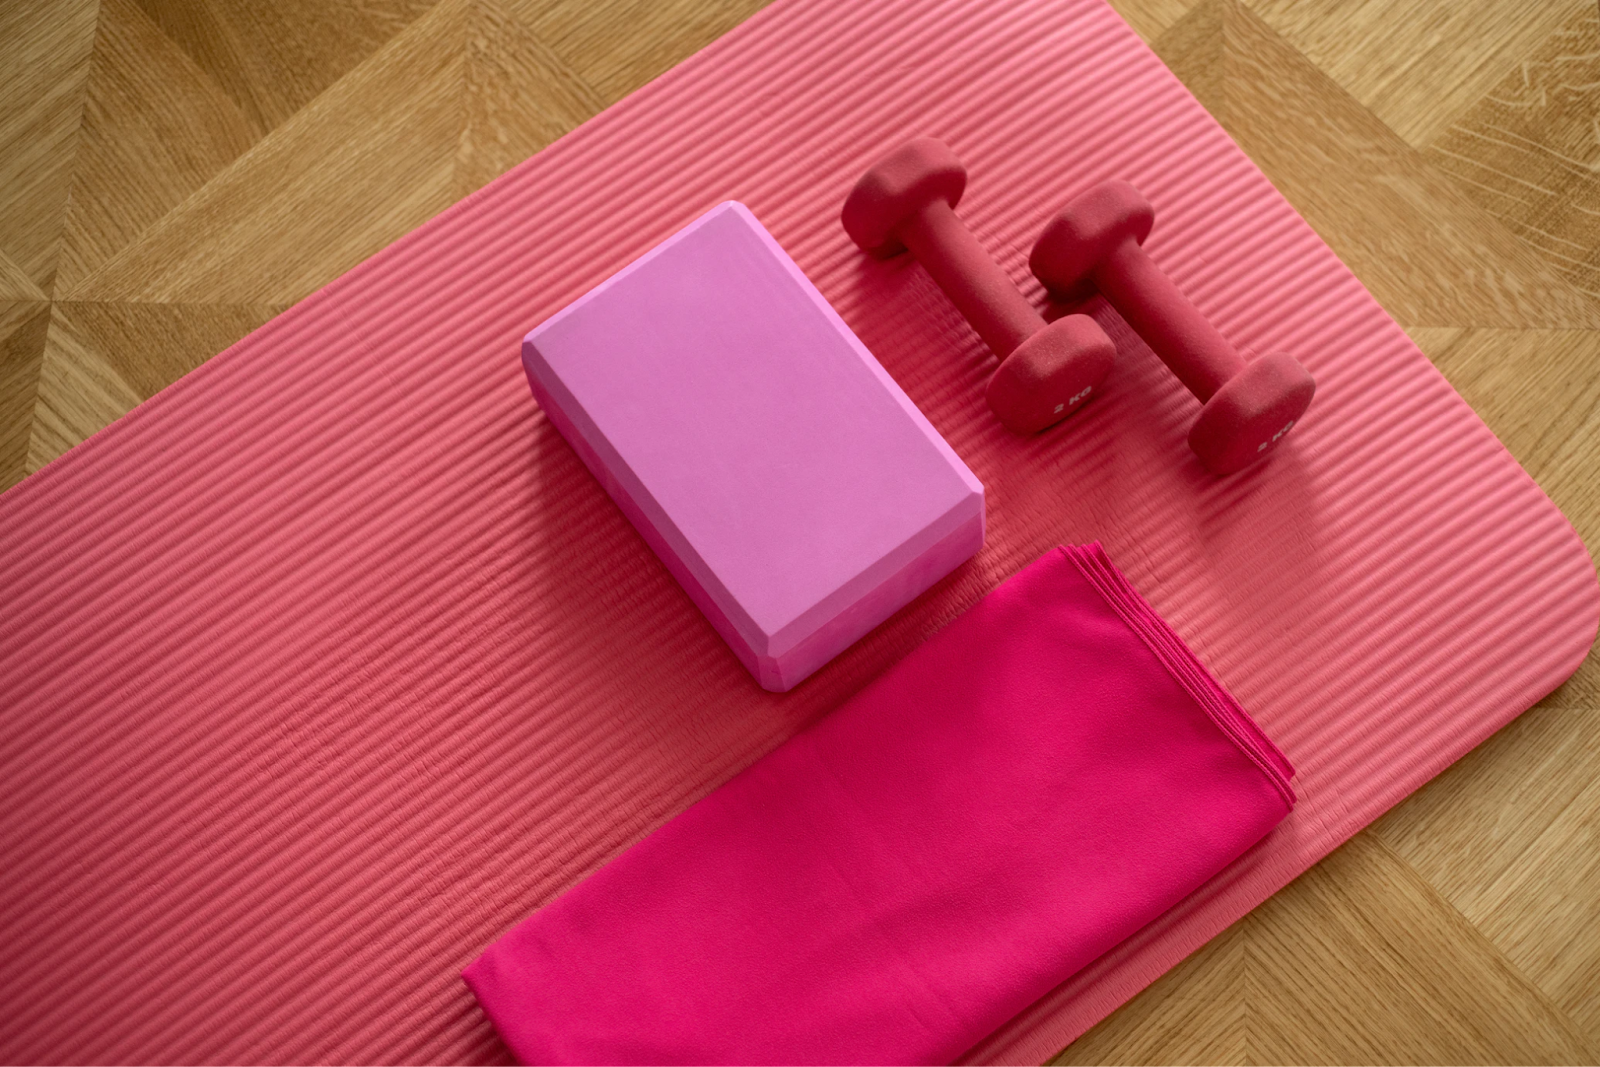 Selling yoga mats on Shopify